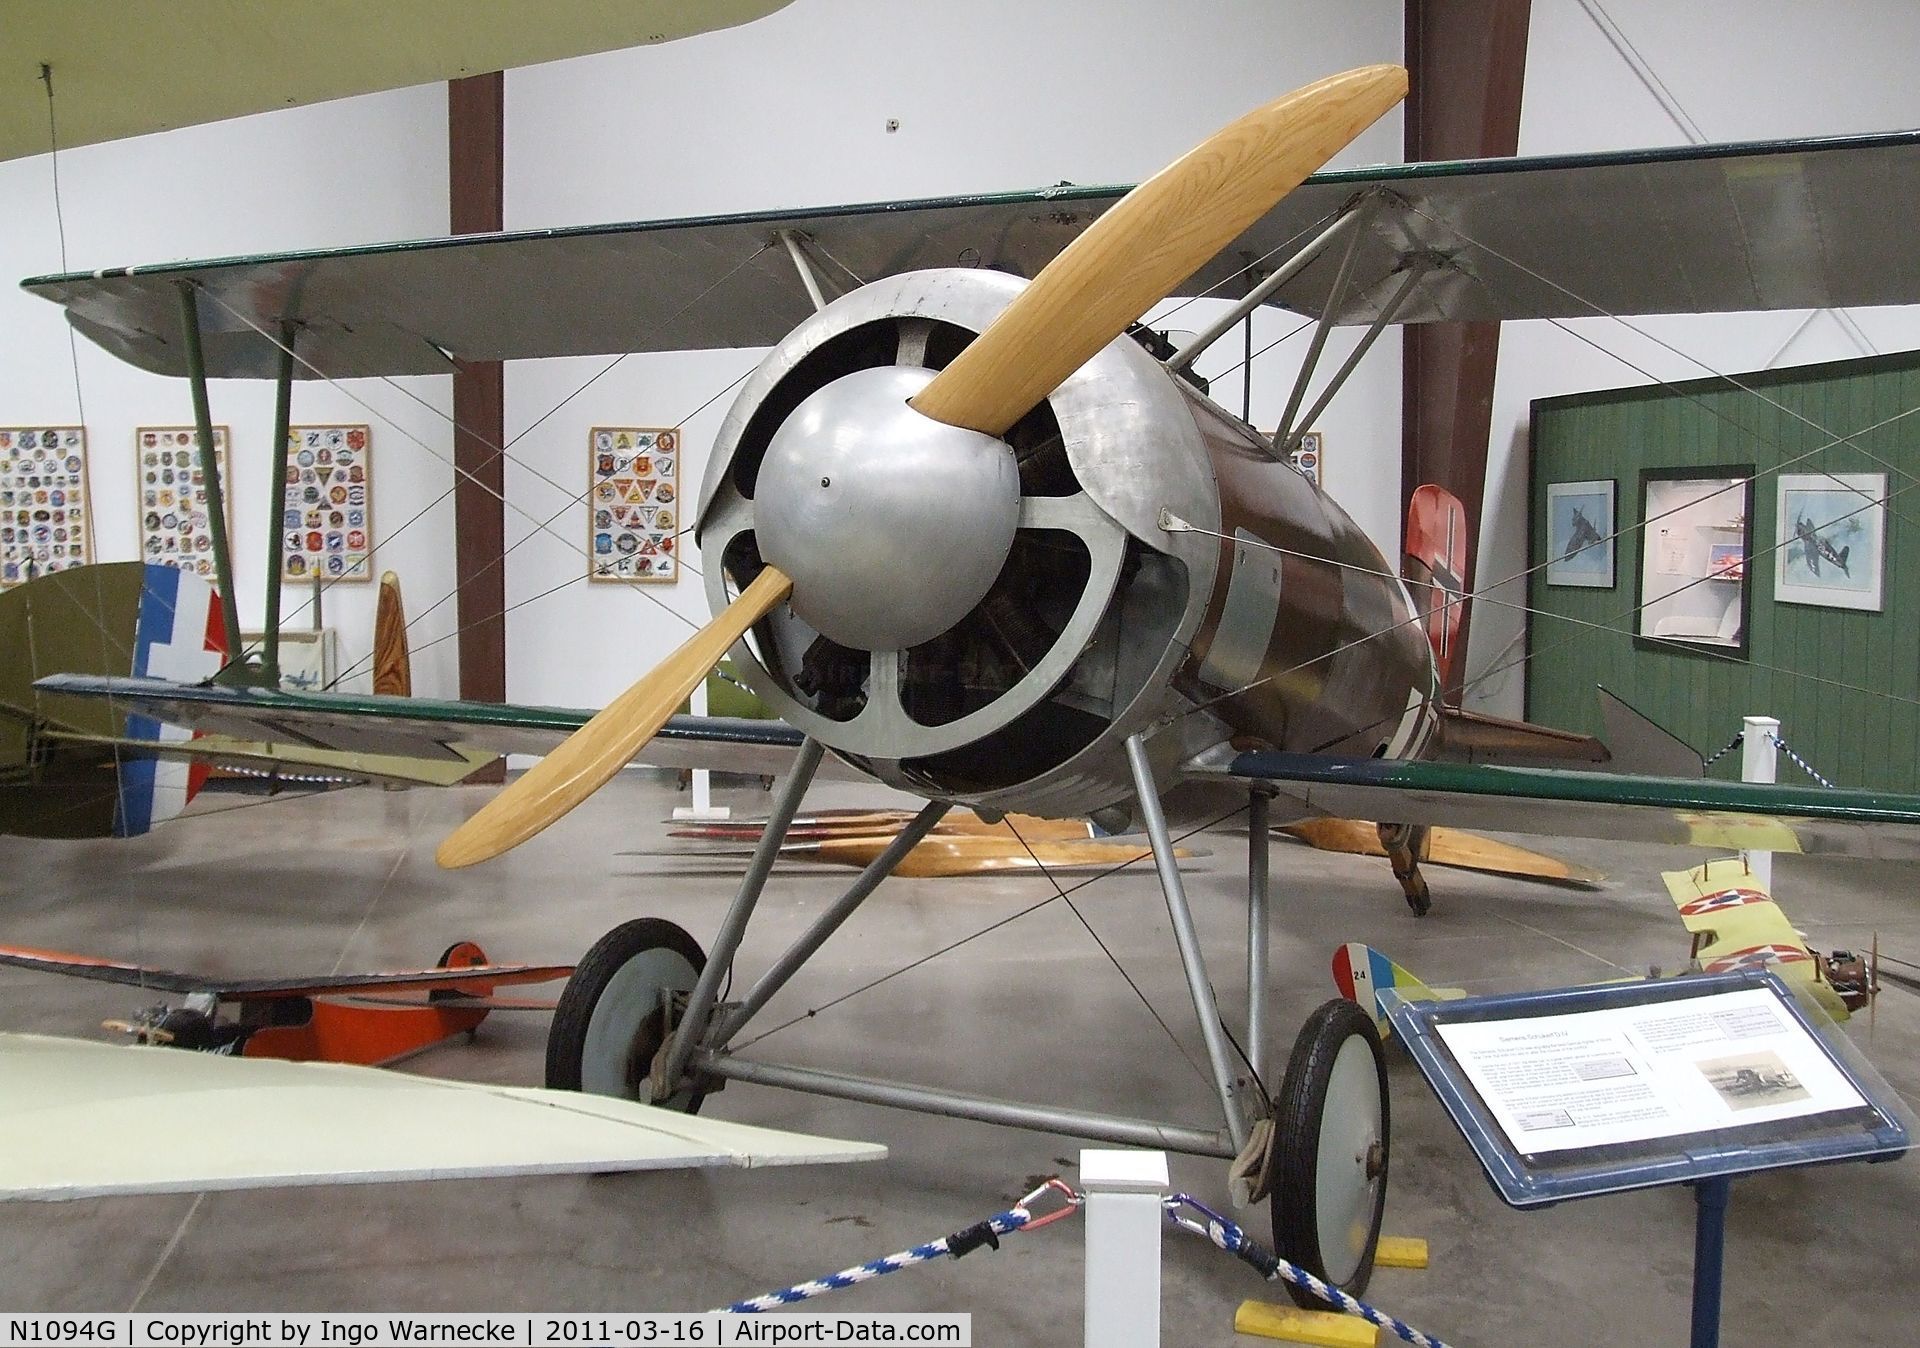 N1094G, Siemens-Schuckert (SSW) D-IV C/N S10, Carl R Swanson Siemens-Schuckert D IV replica at the Planes of Fame Air Museum, Valle AZ